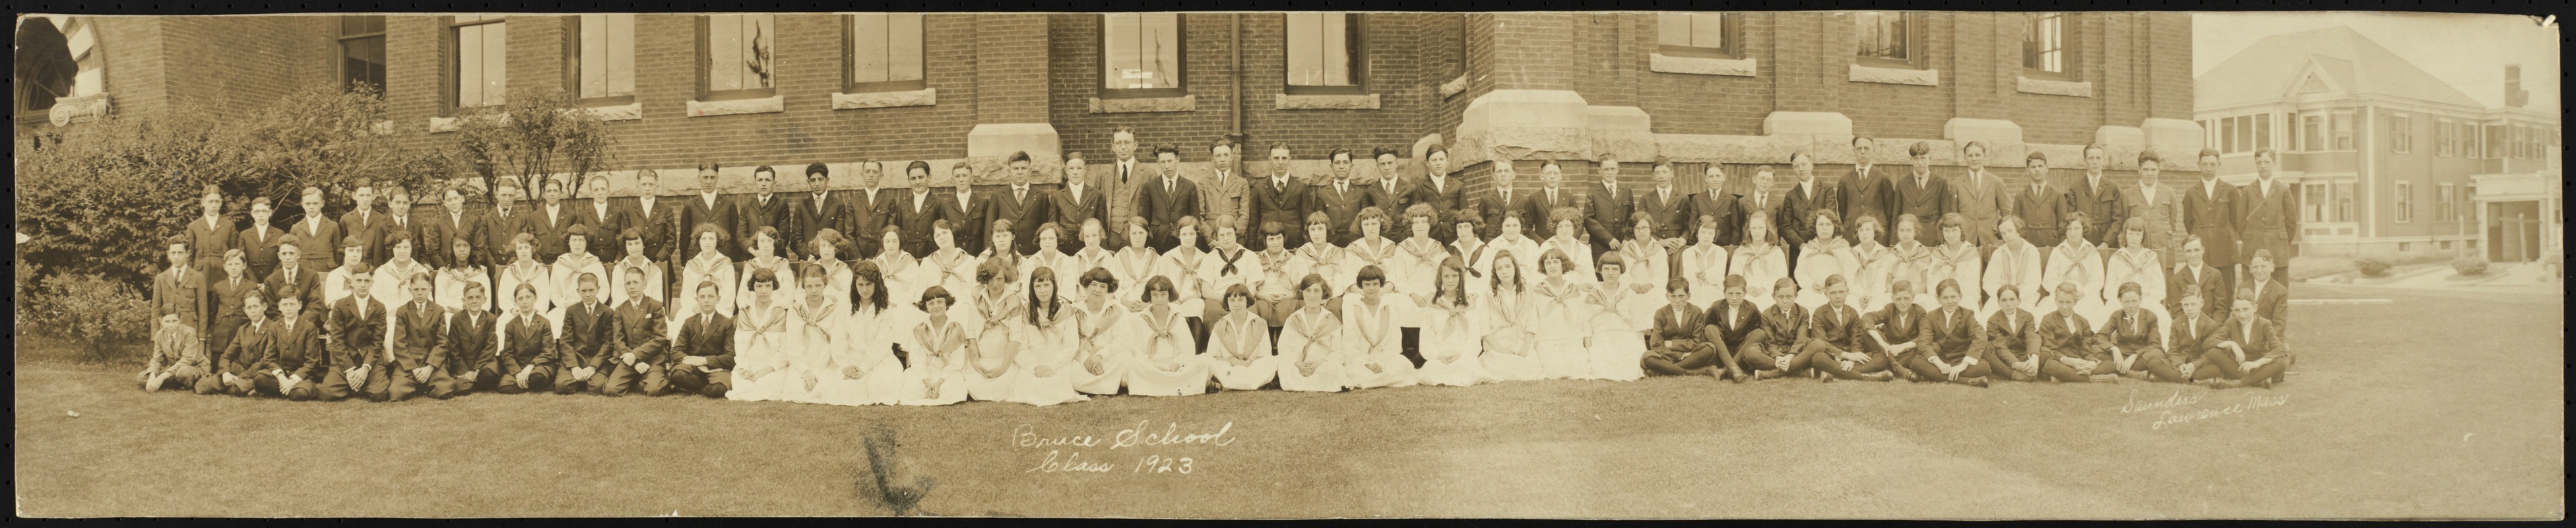 Bruce School Class 1923